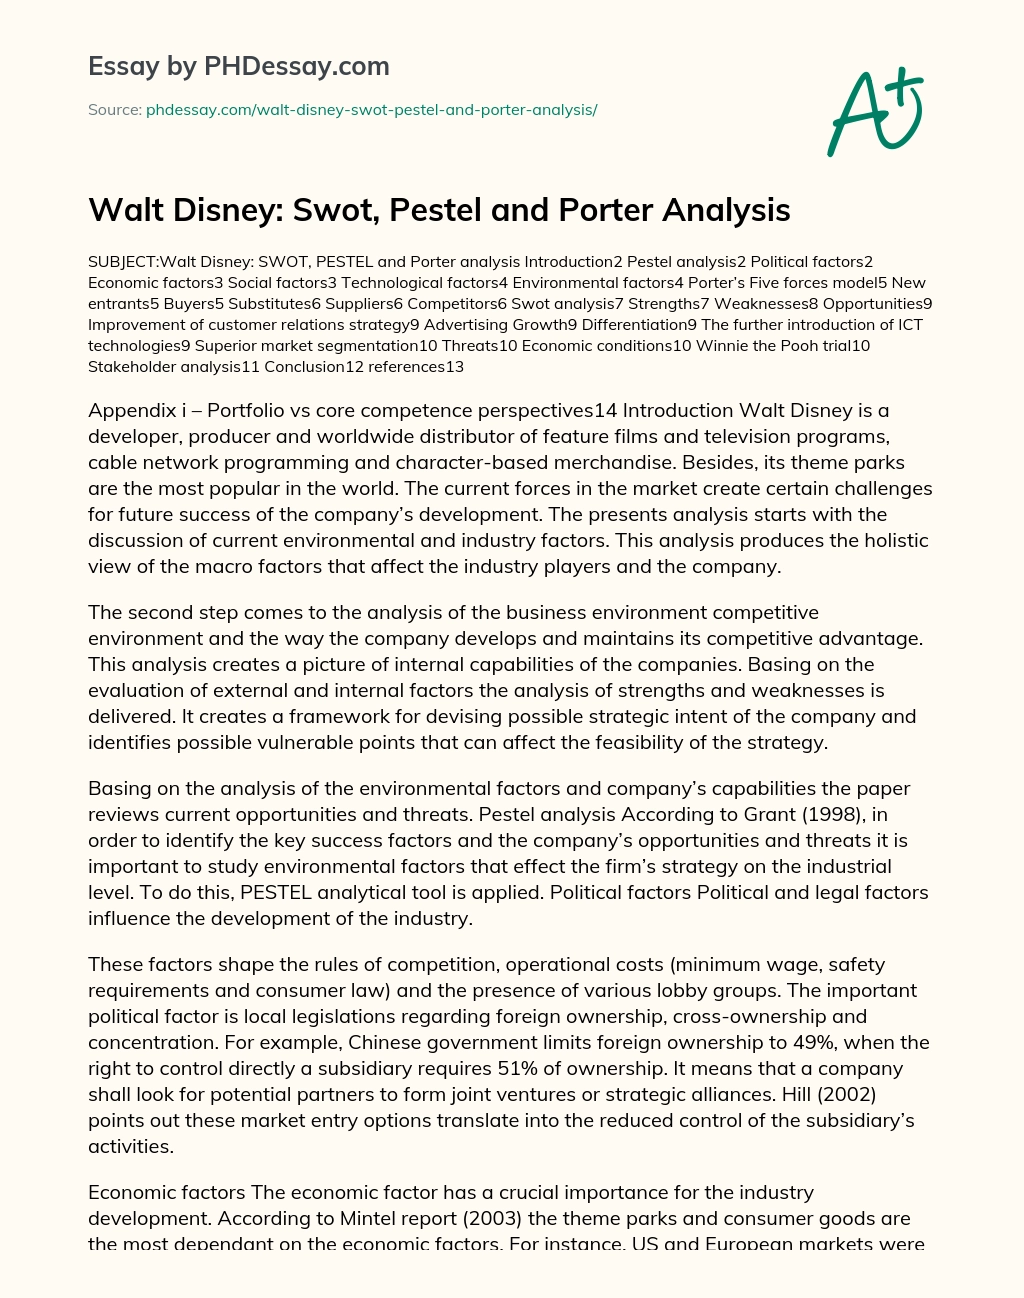 Walt Disney: Swot, Pestel and Porter Analysis essay